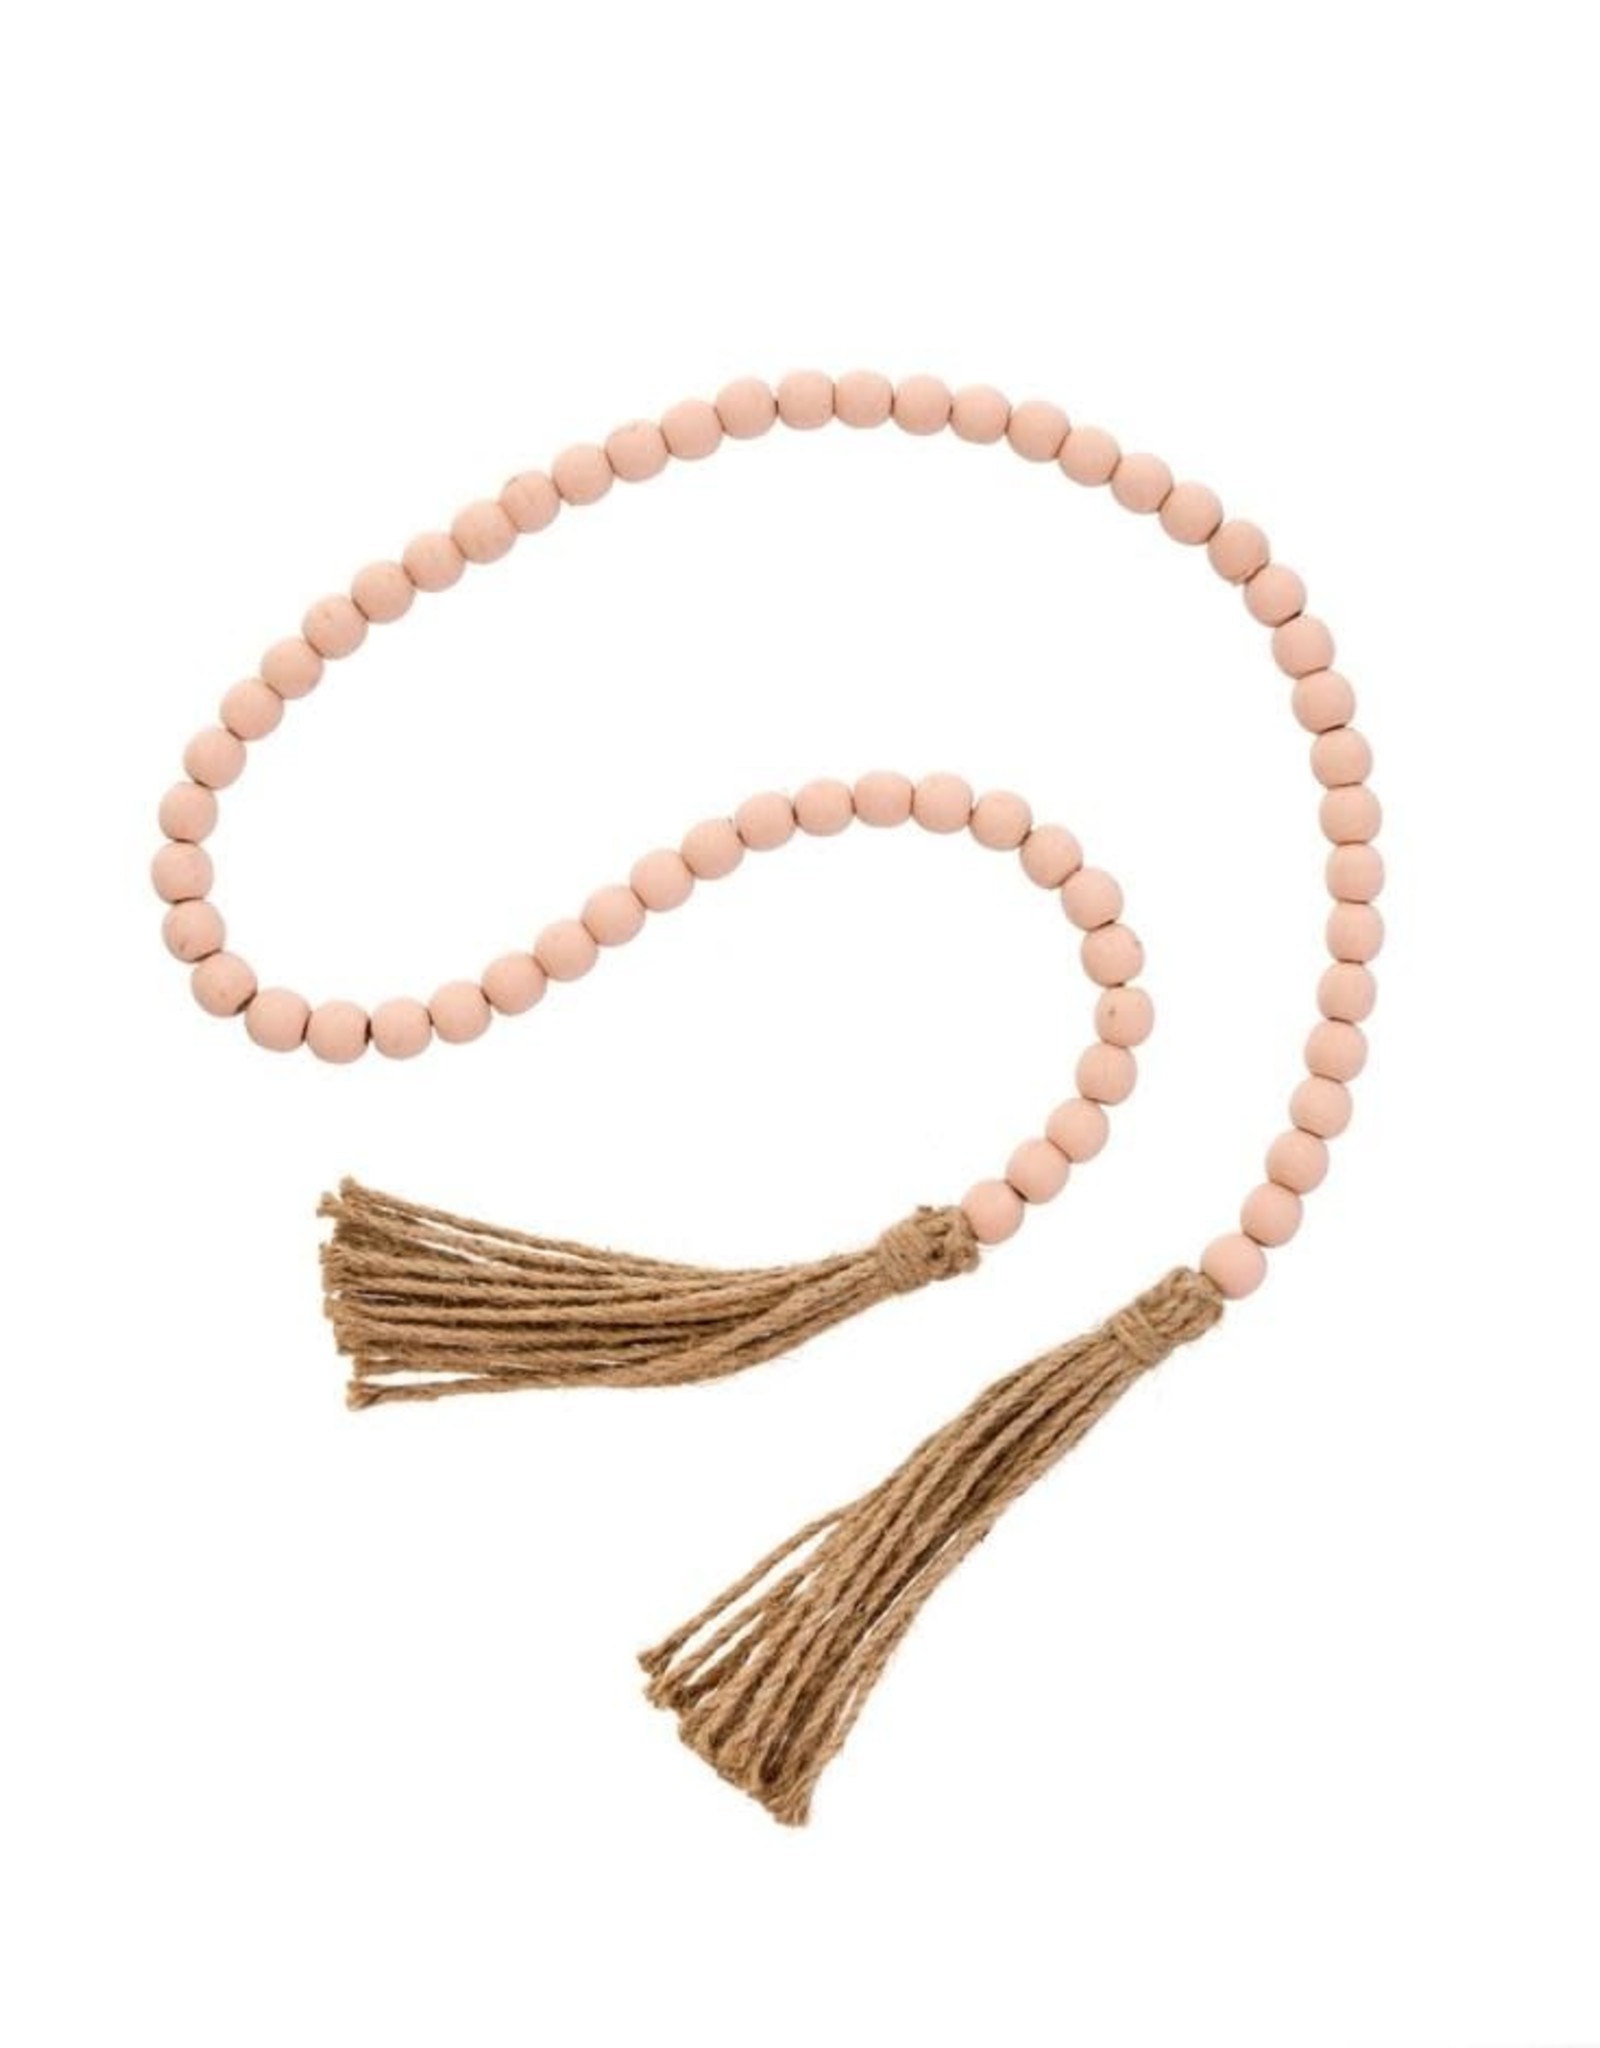 Tassel Prayer Beads